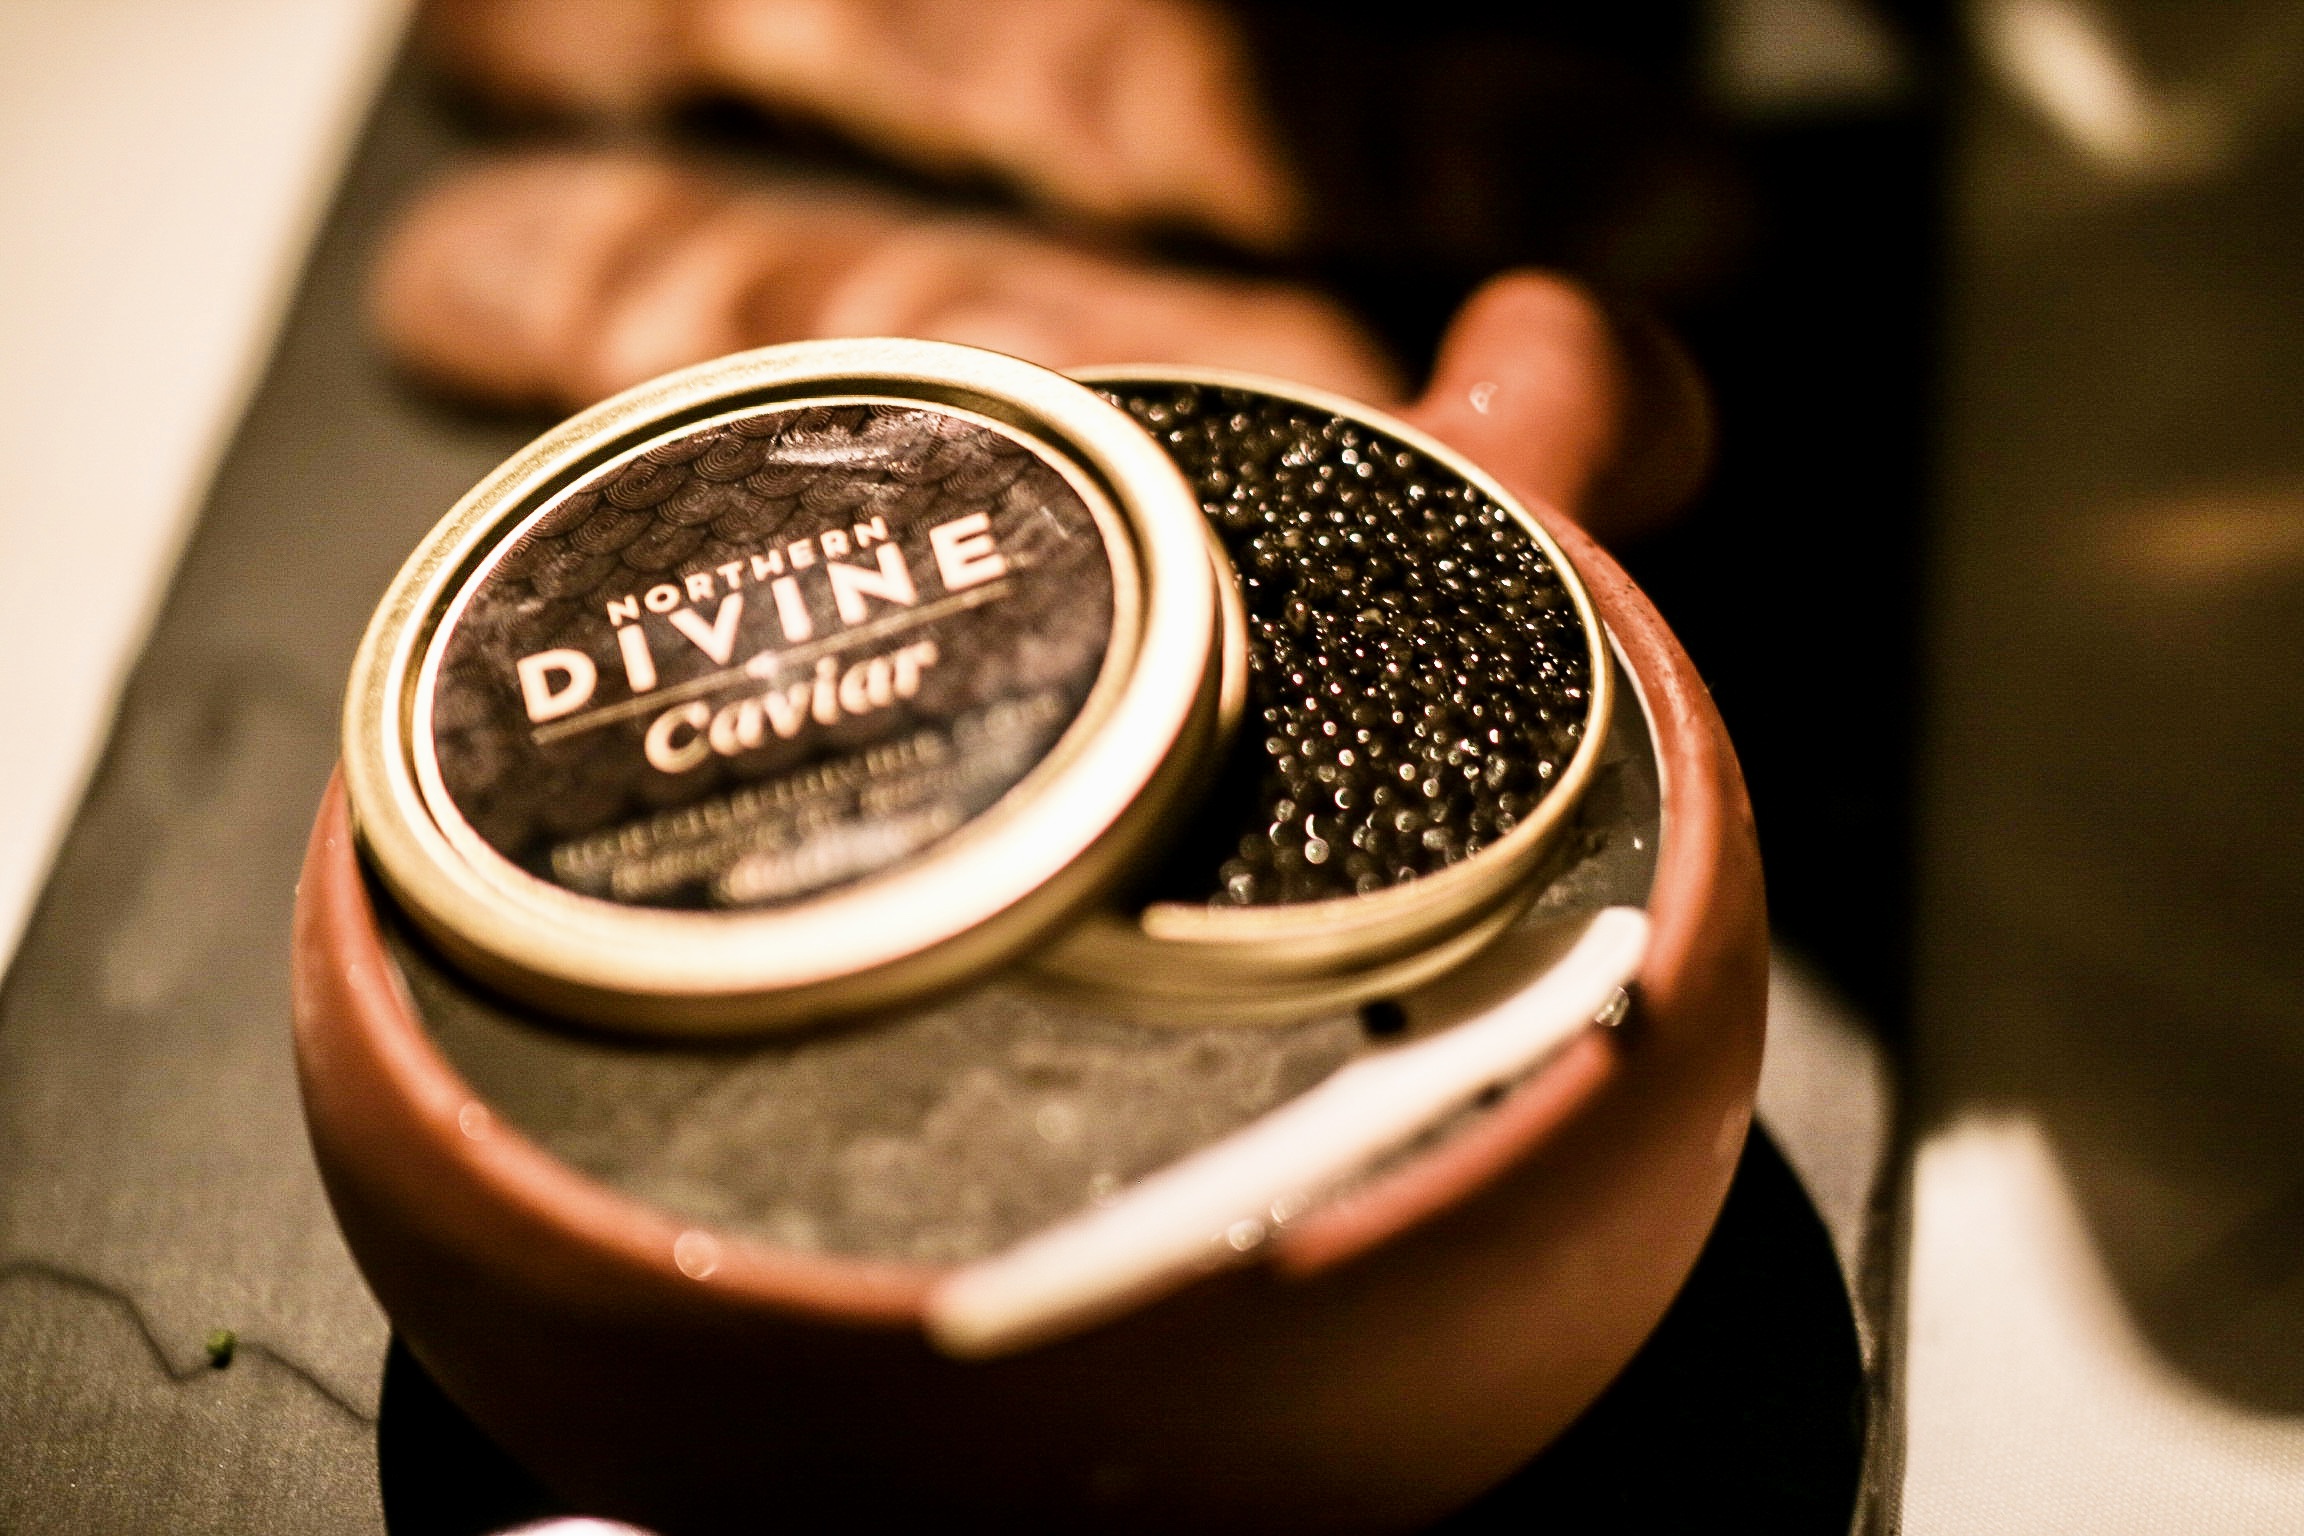 Northern Divine white sturgeon caviar